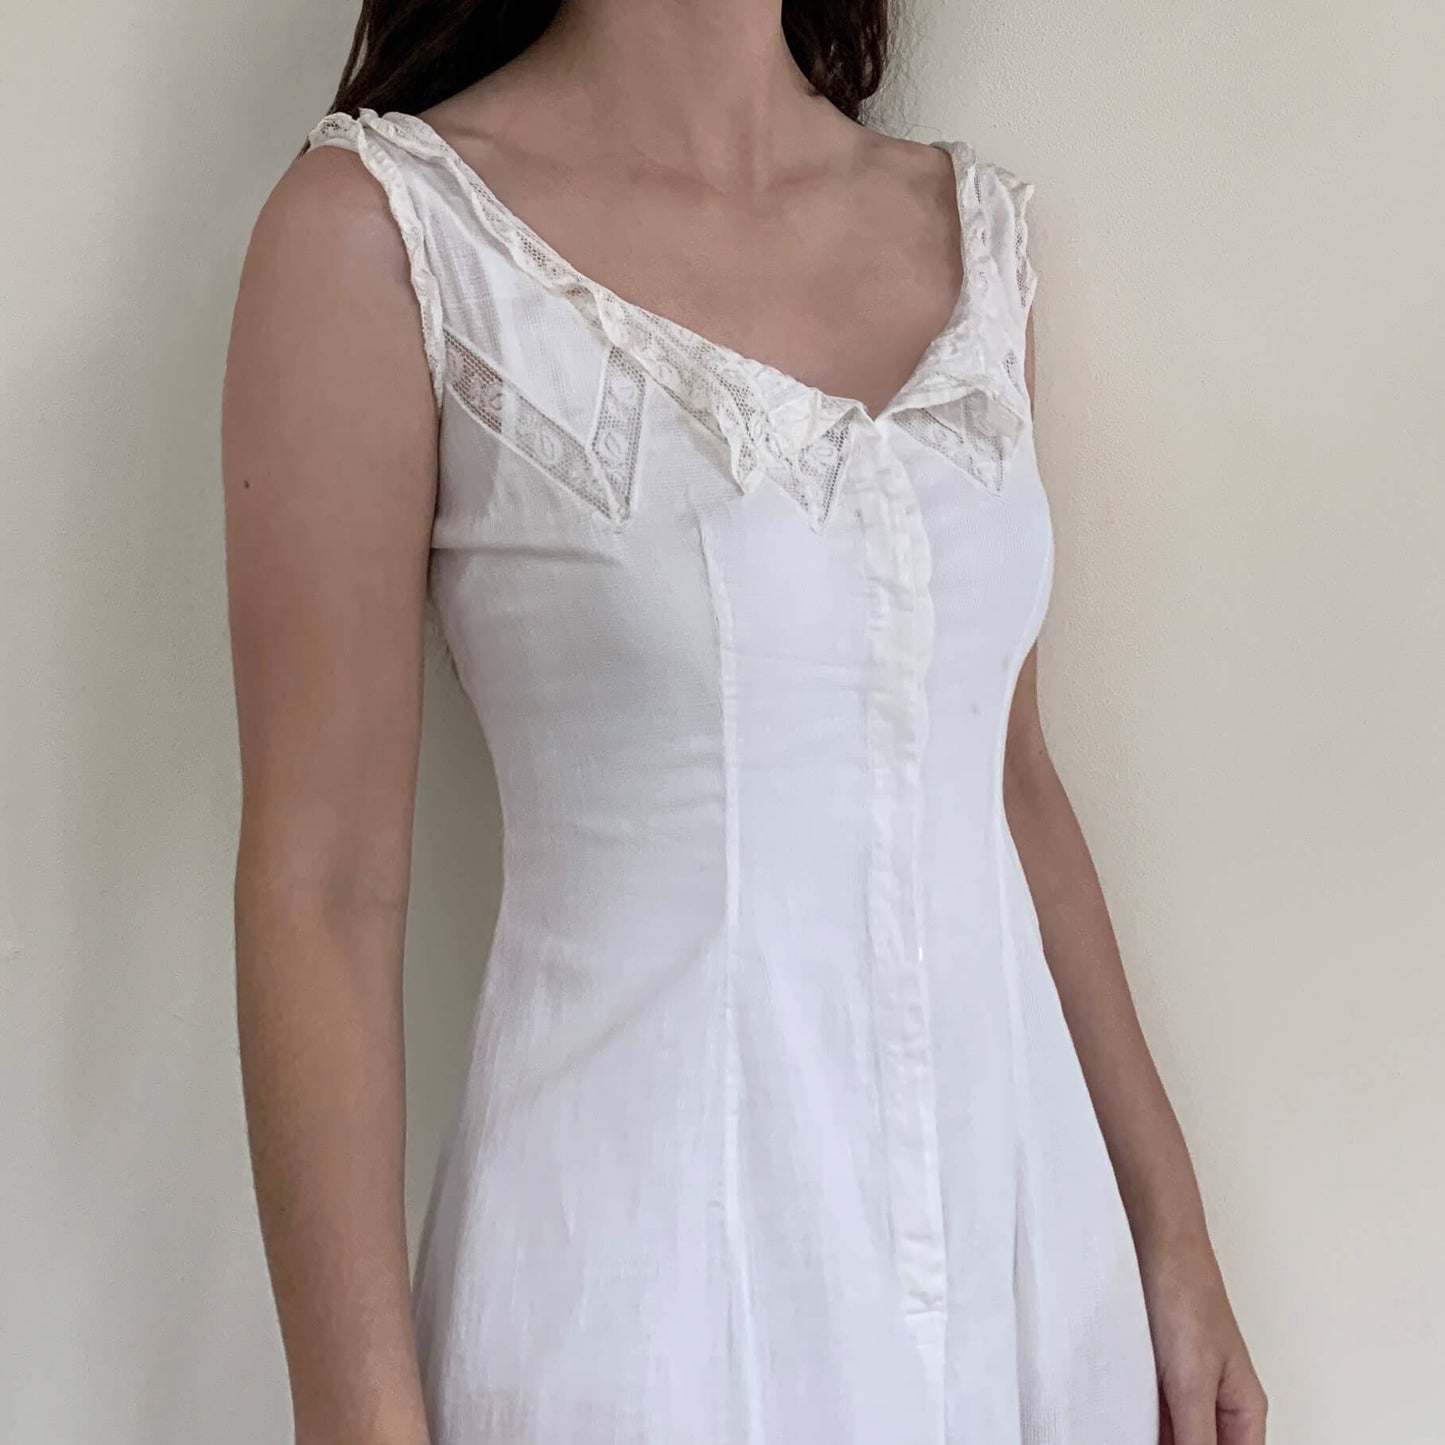 edwardian lingerie in white cotton